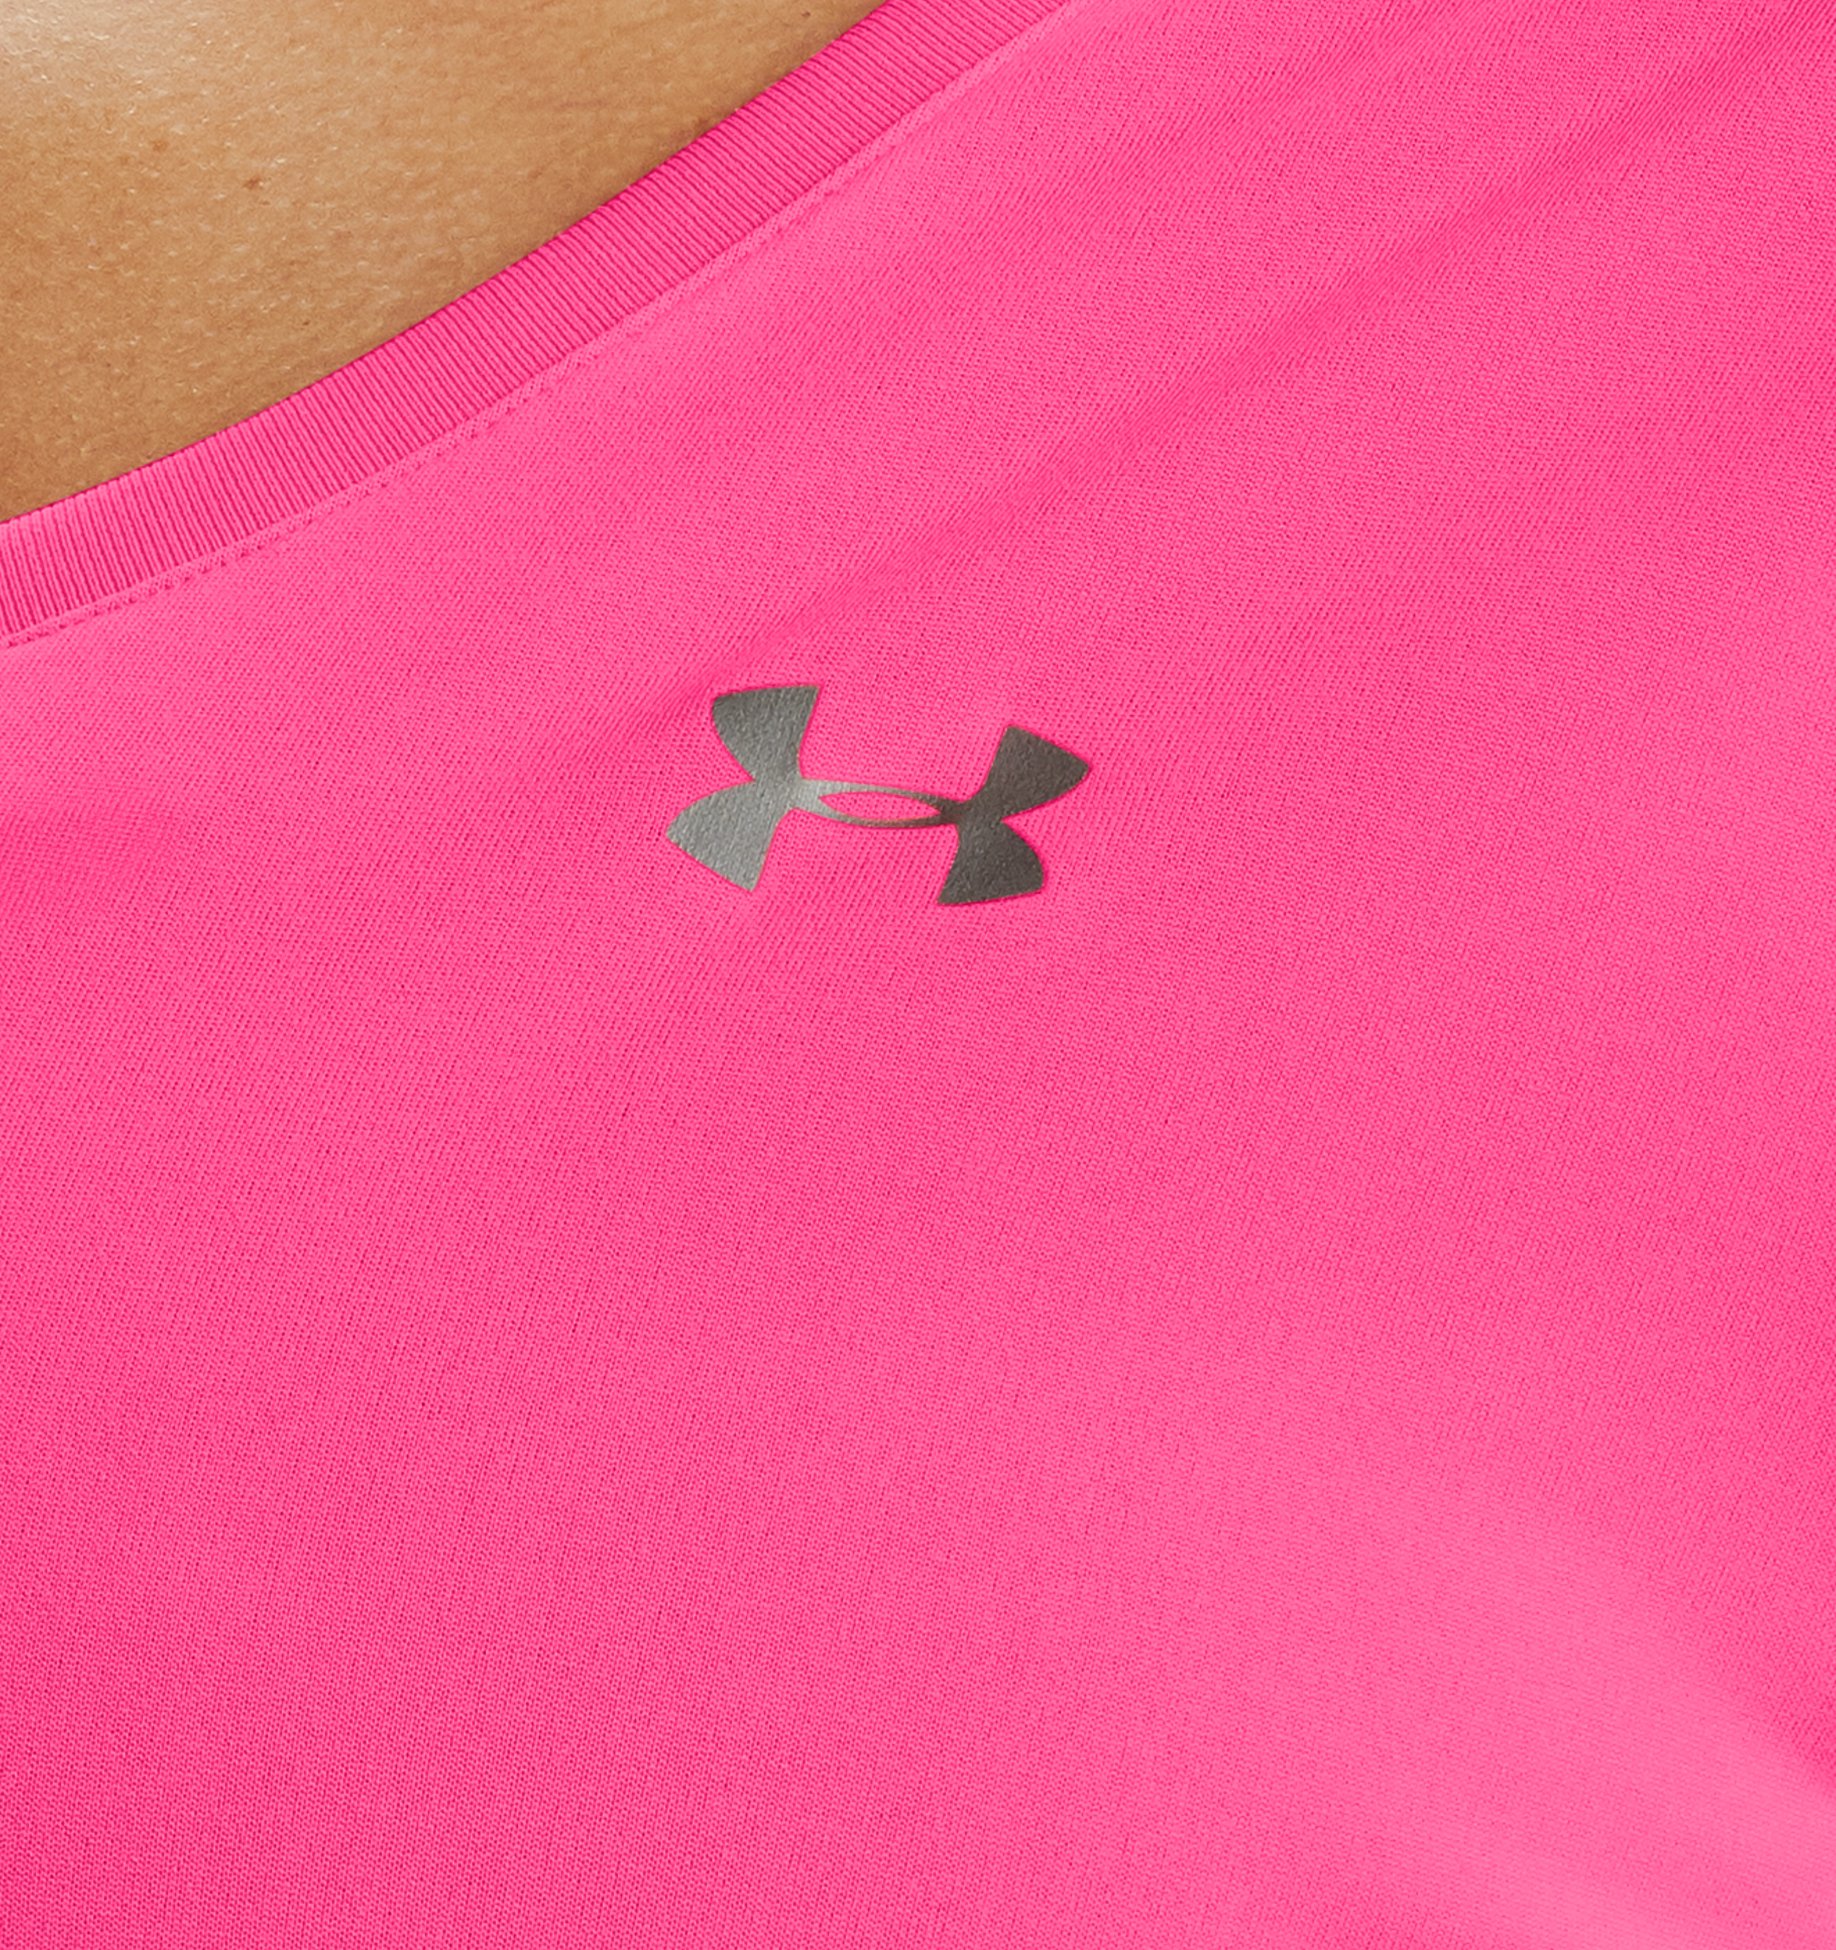 Women's UA Tech™ Short Sleeve V-Neck | Under Armour